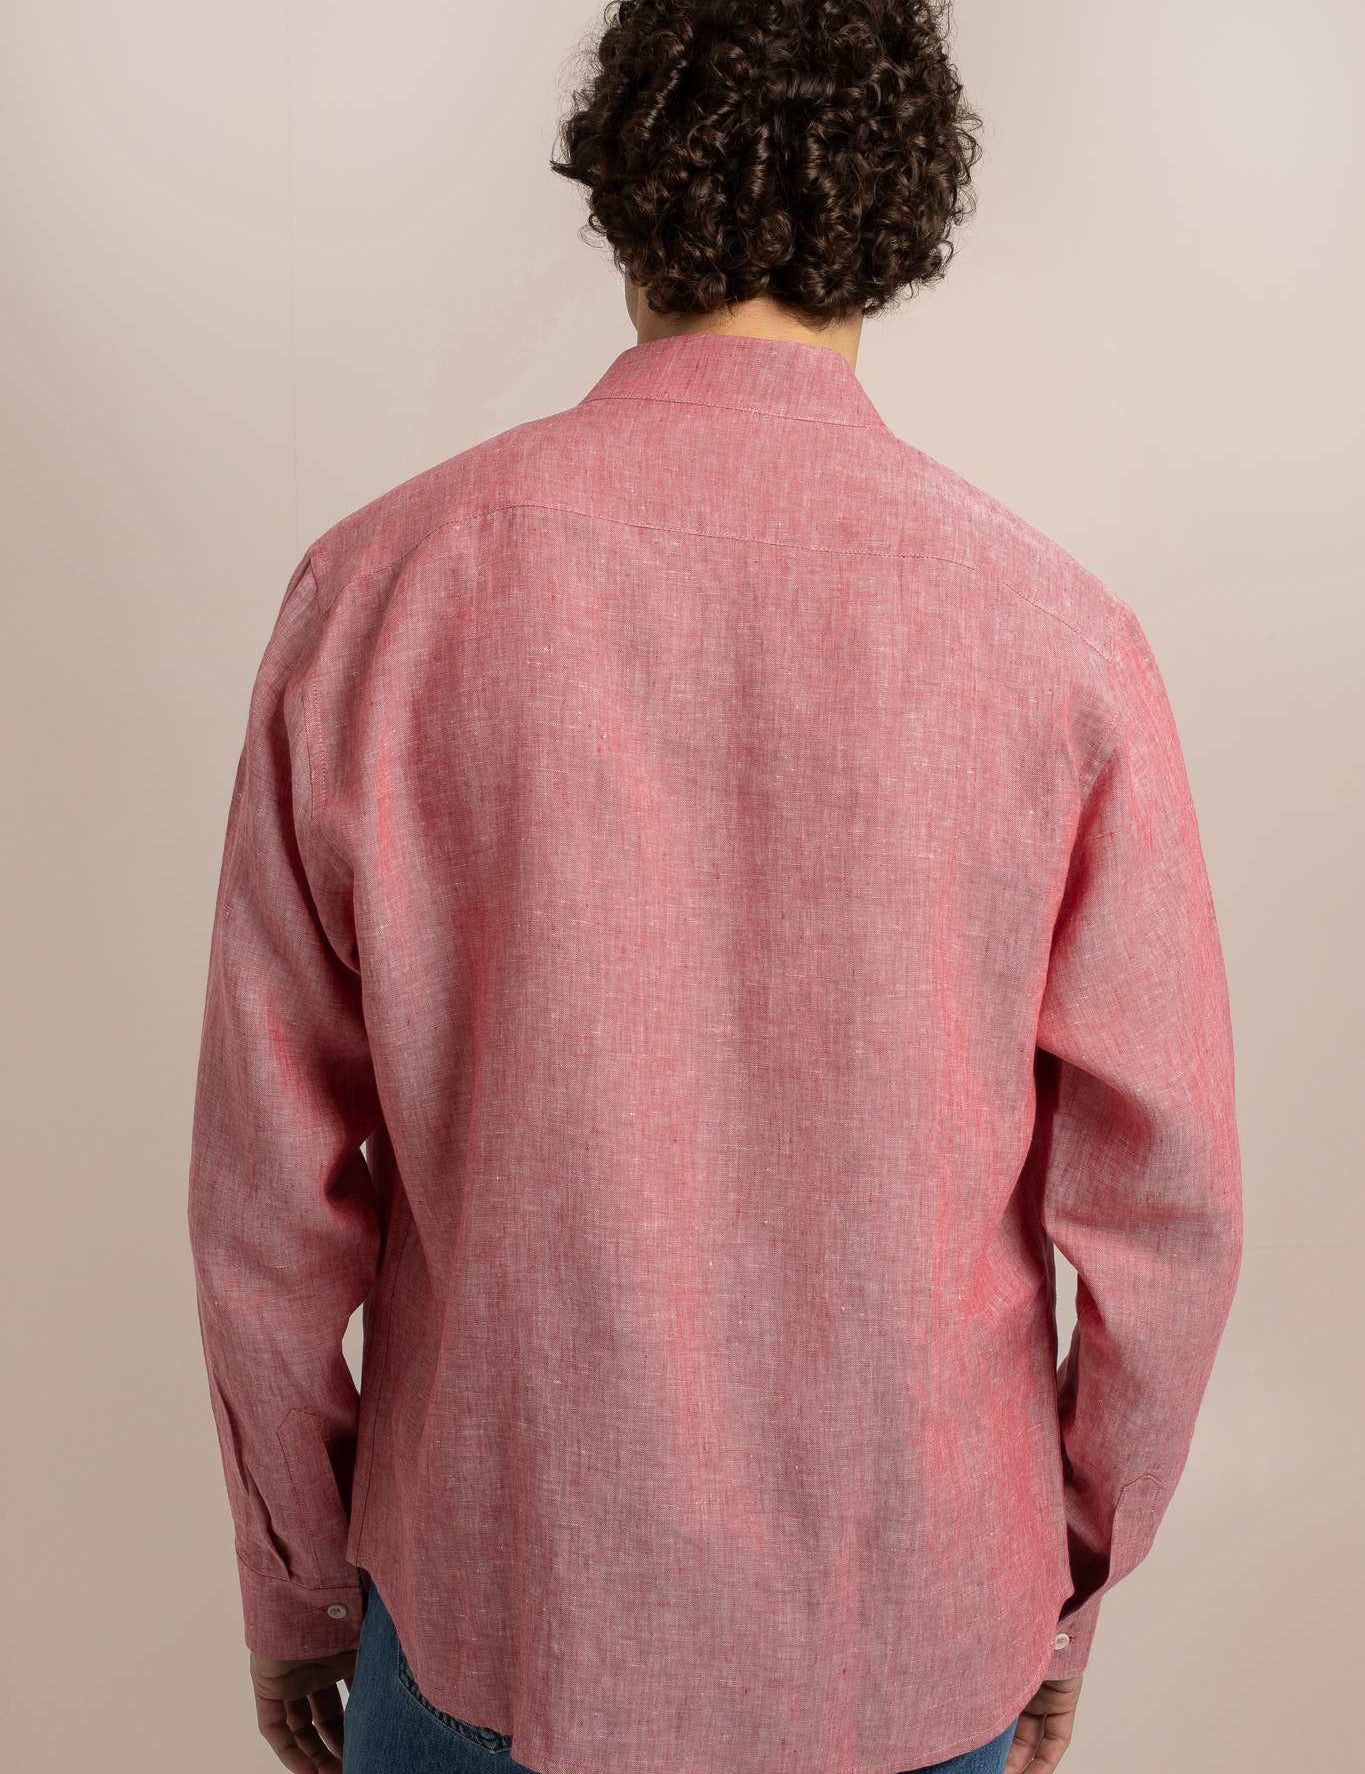 mens-pink-linen-shirt-back-view_2ce91418-0fee-4629-8741-cf113f2fc2d2.jpg